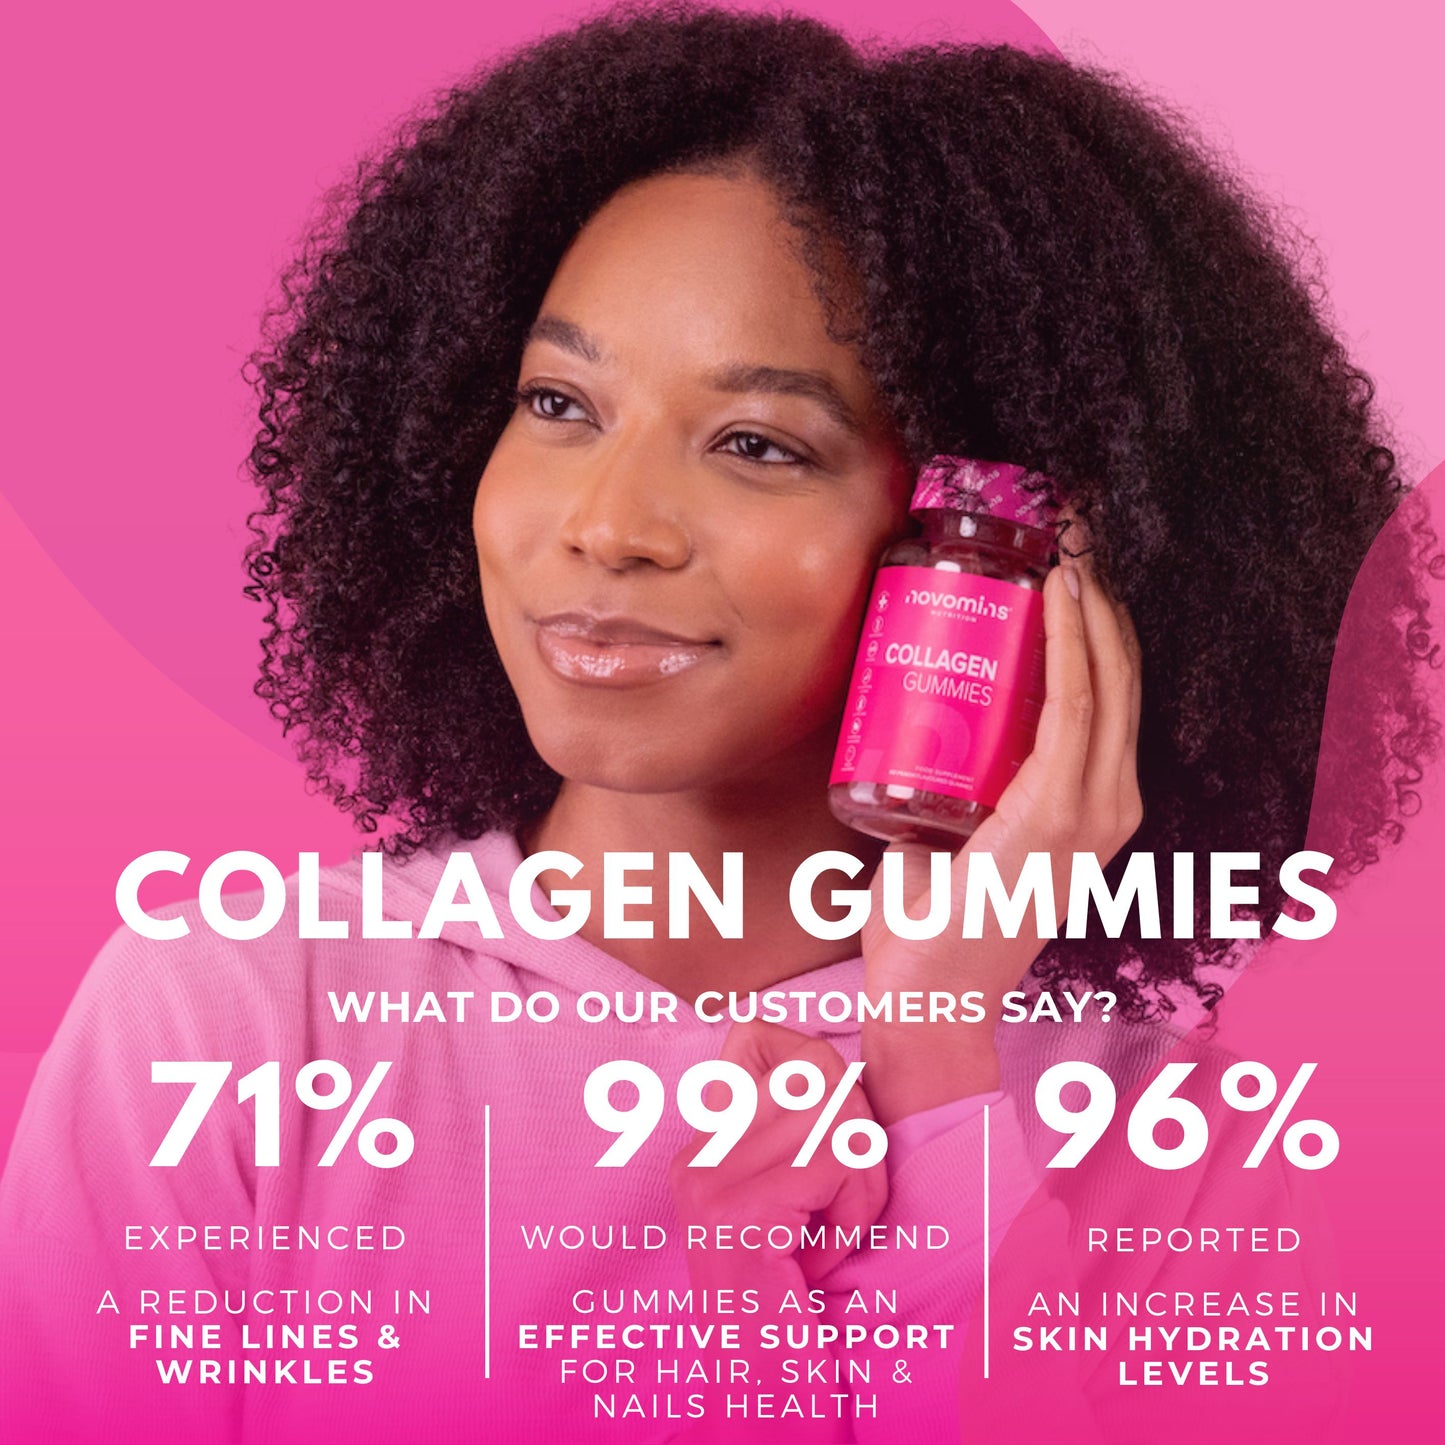 consumer statistics for collagen gummies